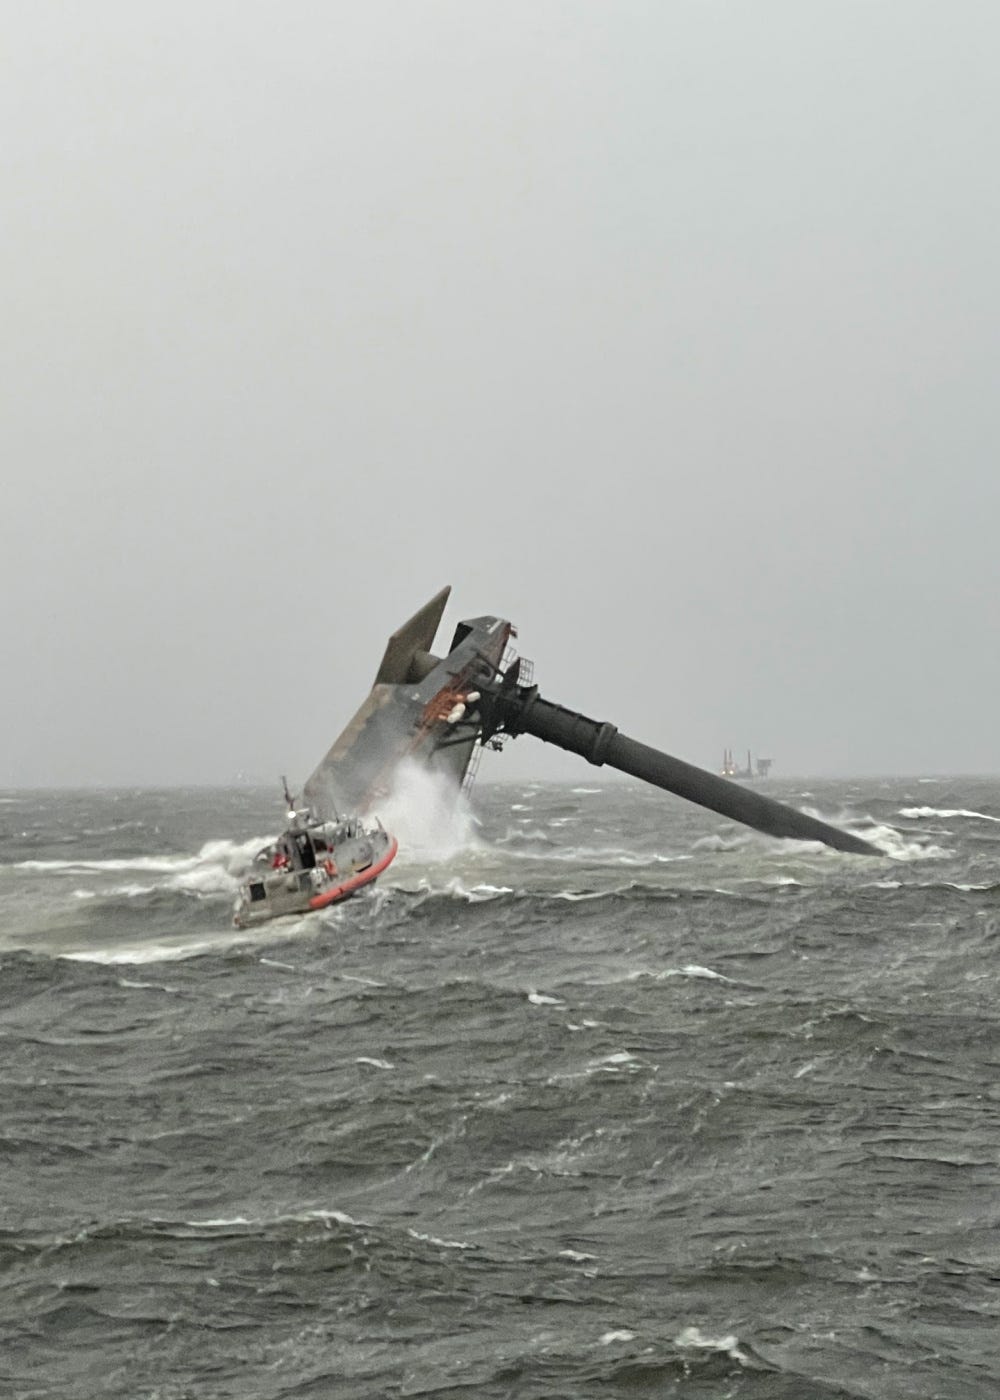 Coast Guard says commercial boat capsized off Louisiana coast